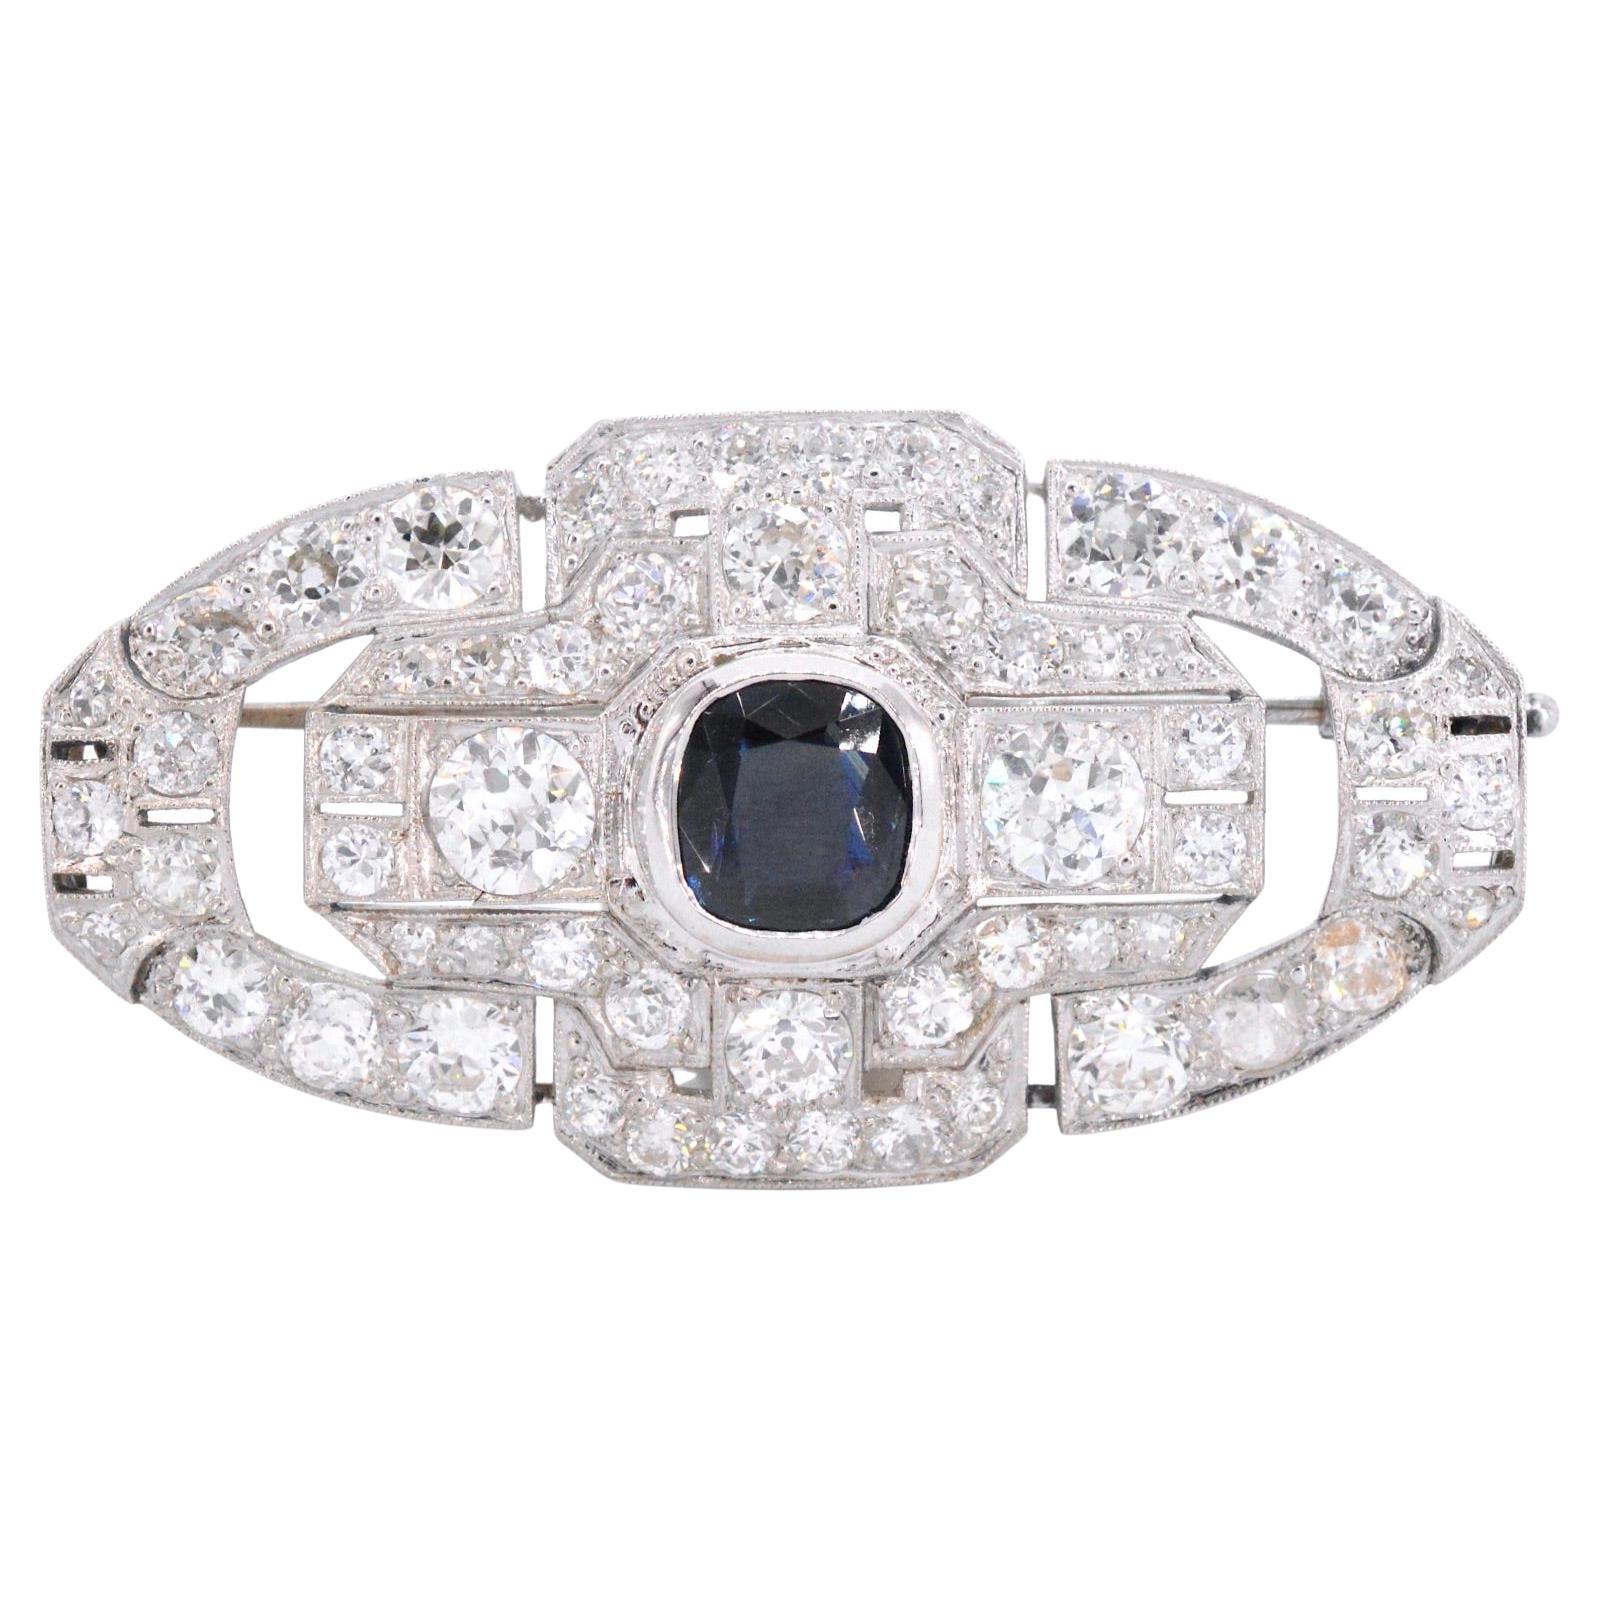 Platinum Art Deco Style Diamond Brooch